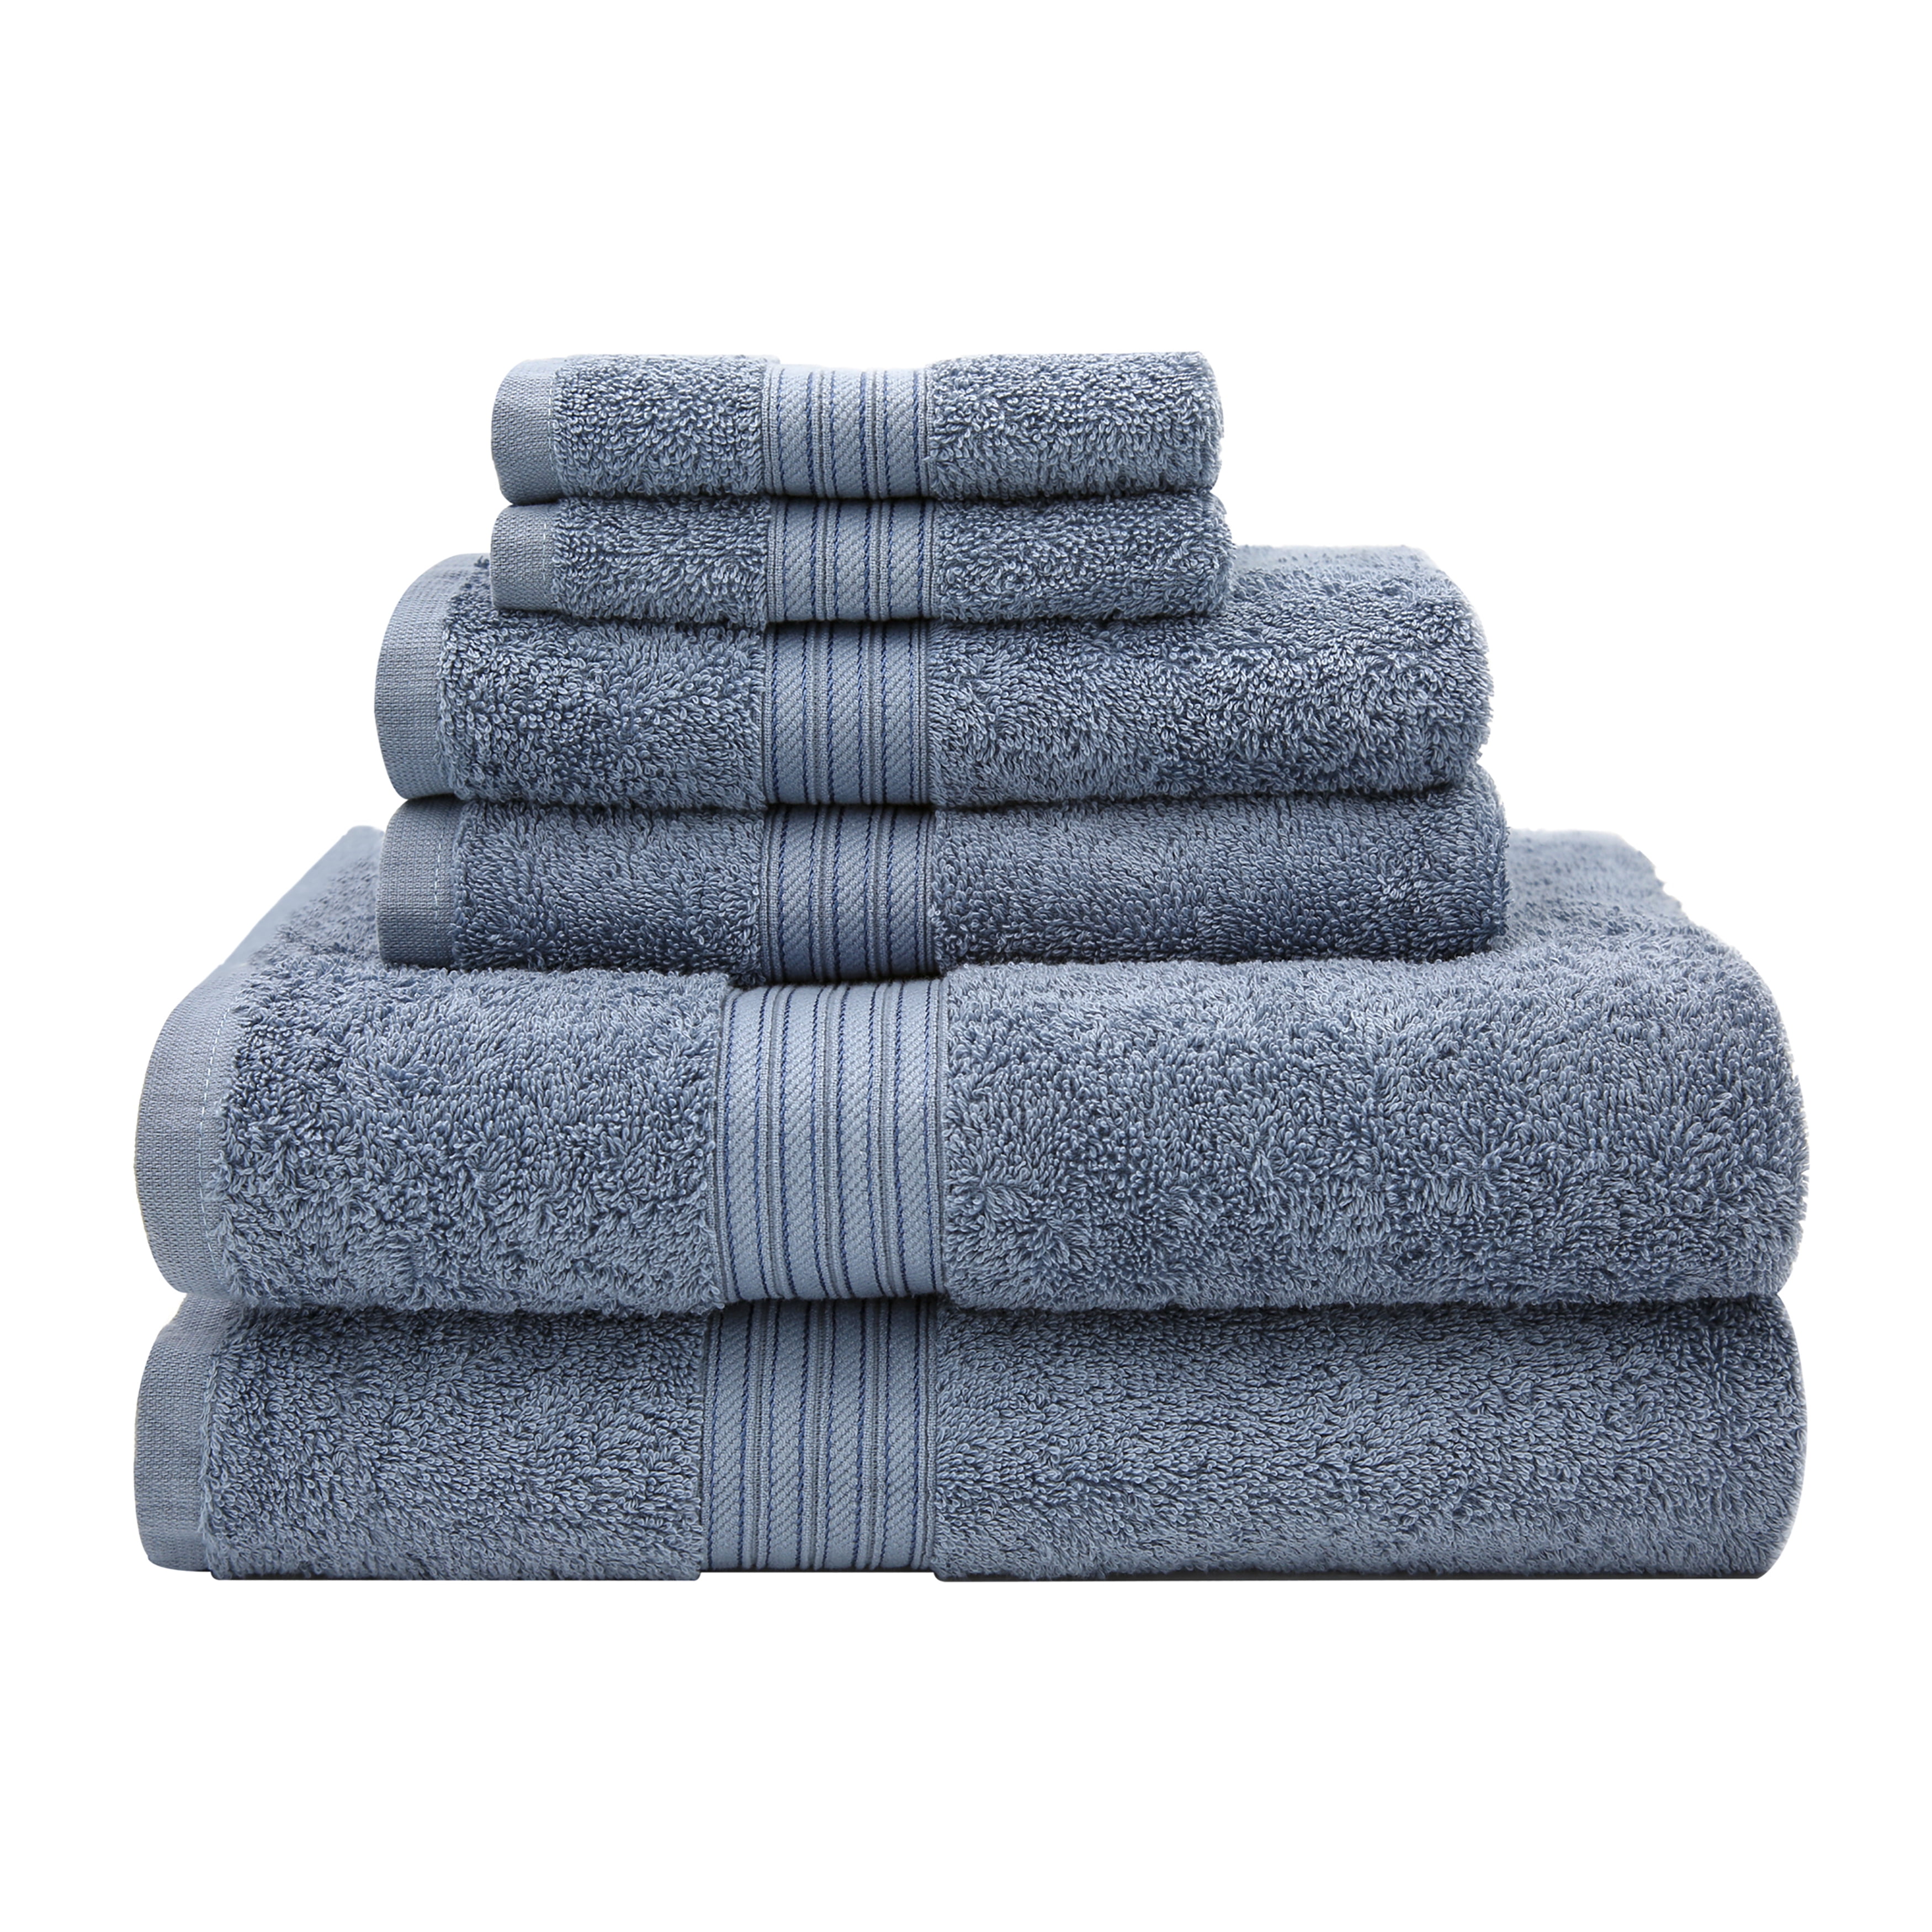 Superior Egyptian Cotton Towel Set 4 Bath 4 Face Towels Winter Blue 4 Hand